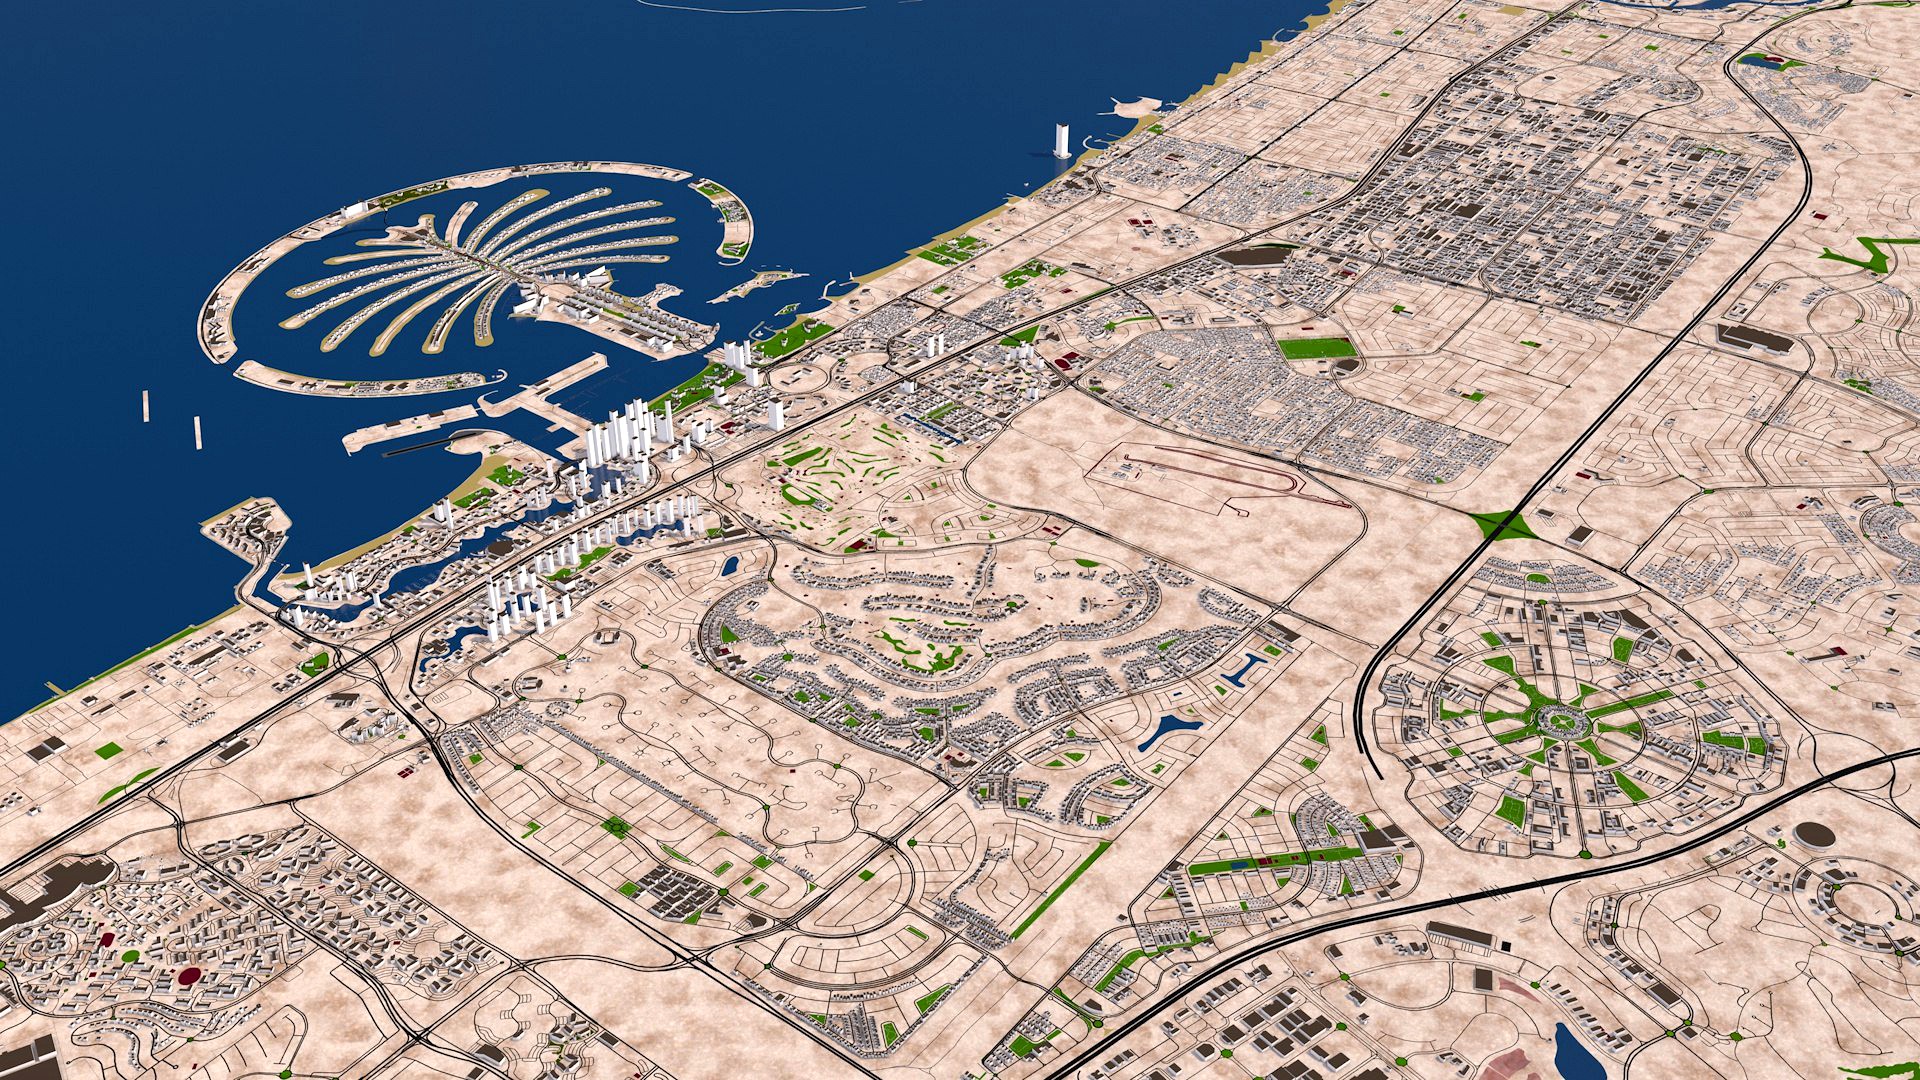 Dubai City 3d model with extra data August 2020 GIS data